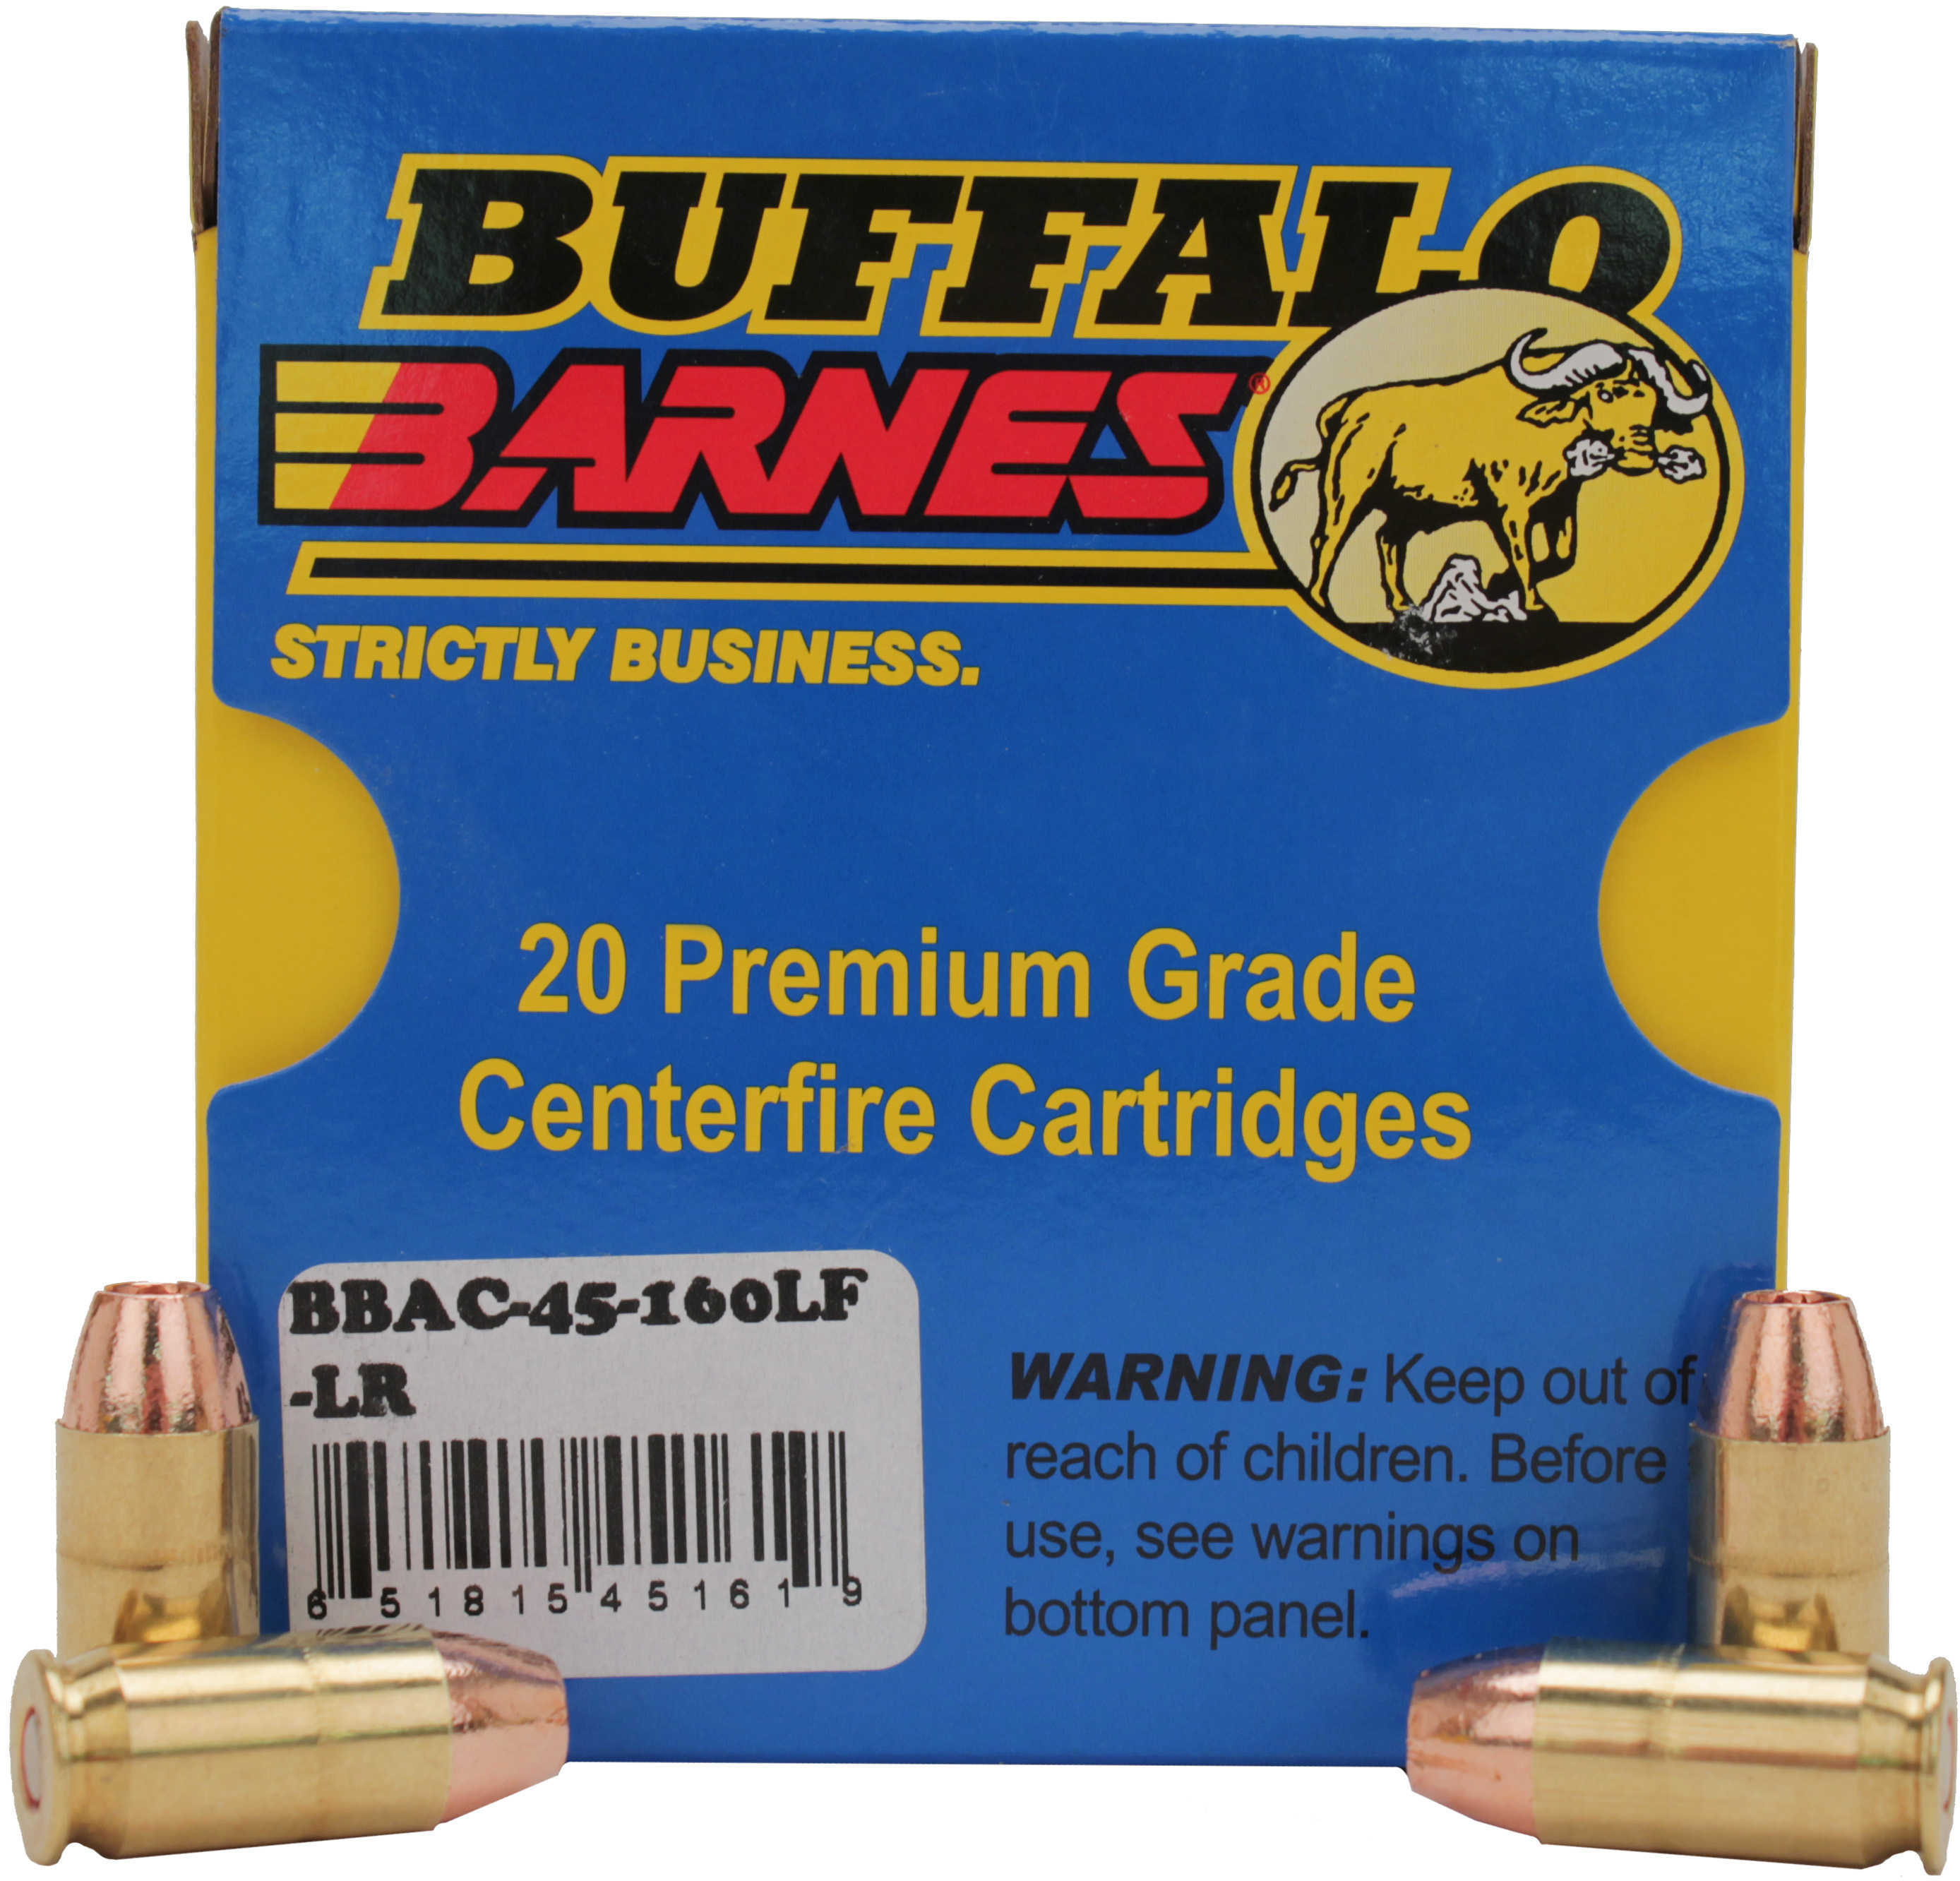 Buffalo Bore Ammunition Barnes Low Recoil 45 ACP 160 Grain TAC-XP (Per 20) 45-160LF-LR